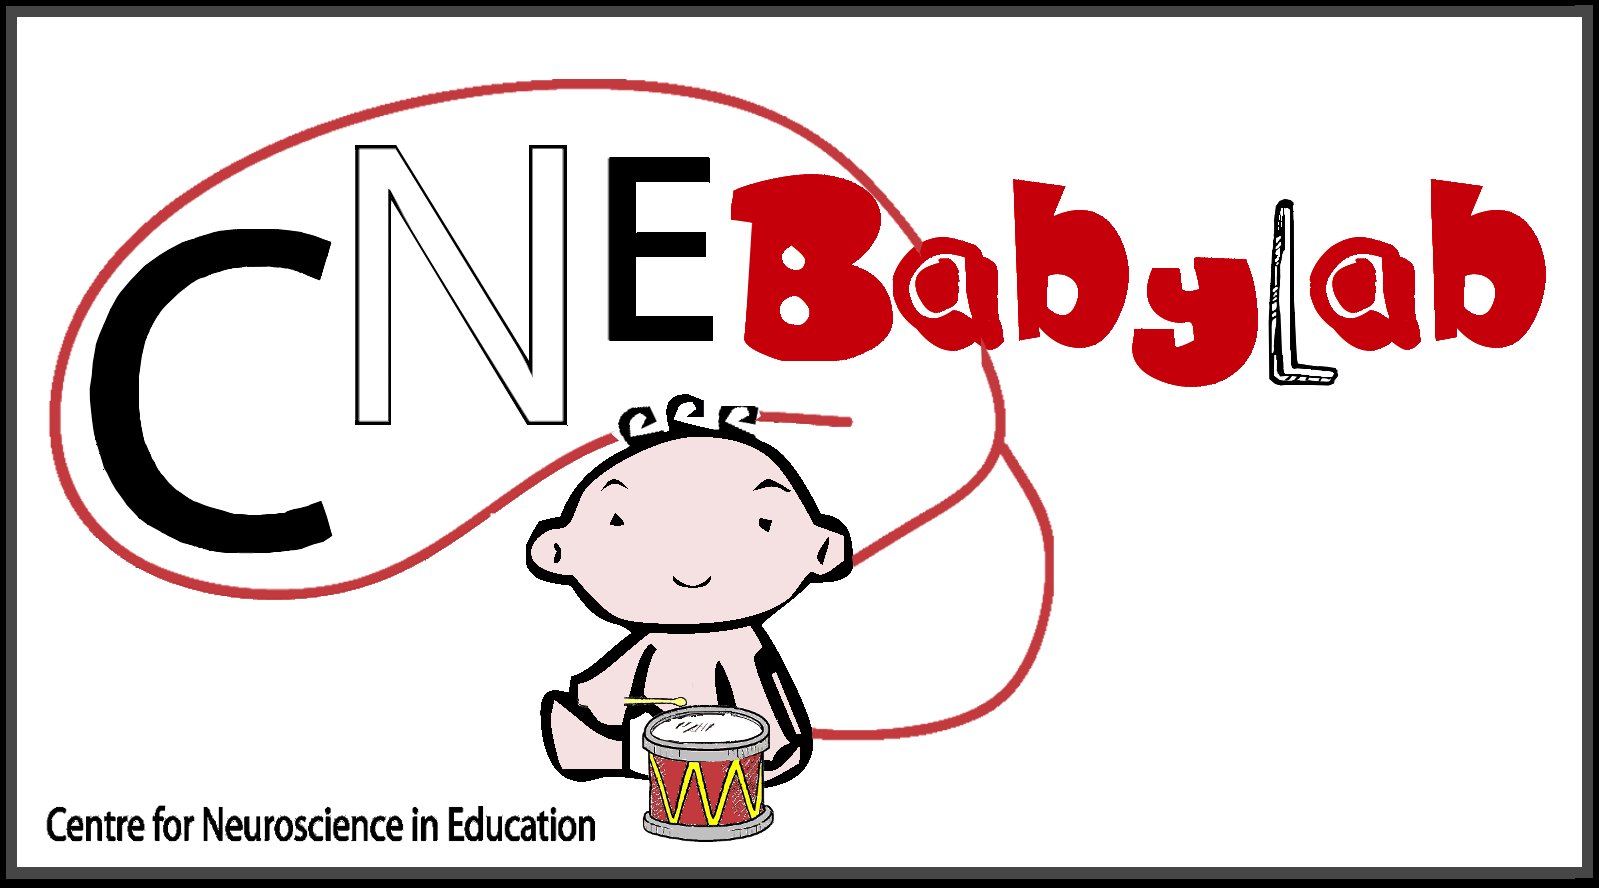 CNE Babylab logo with white background